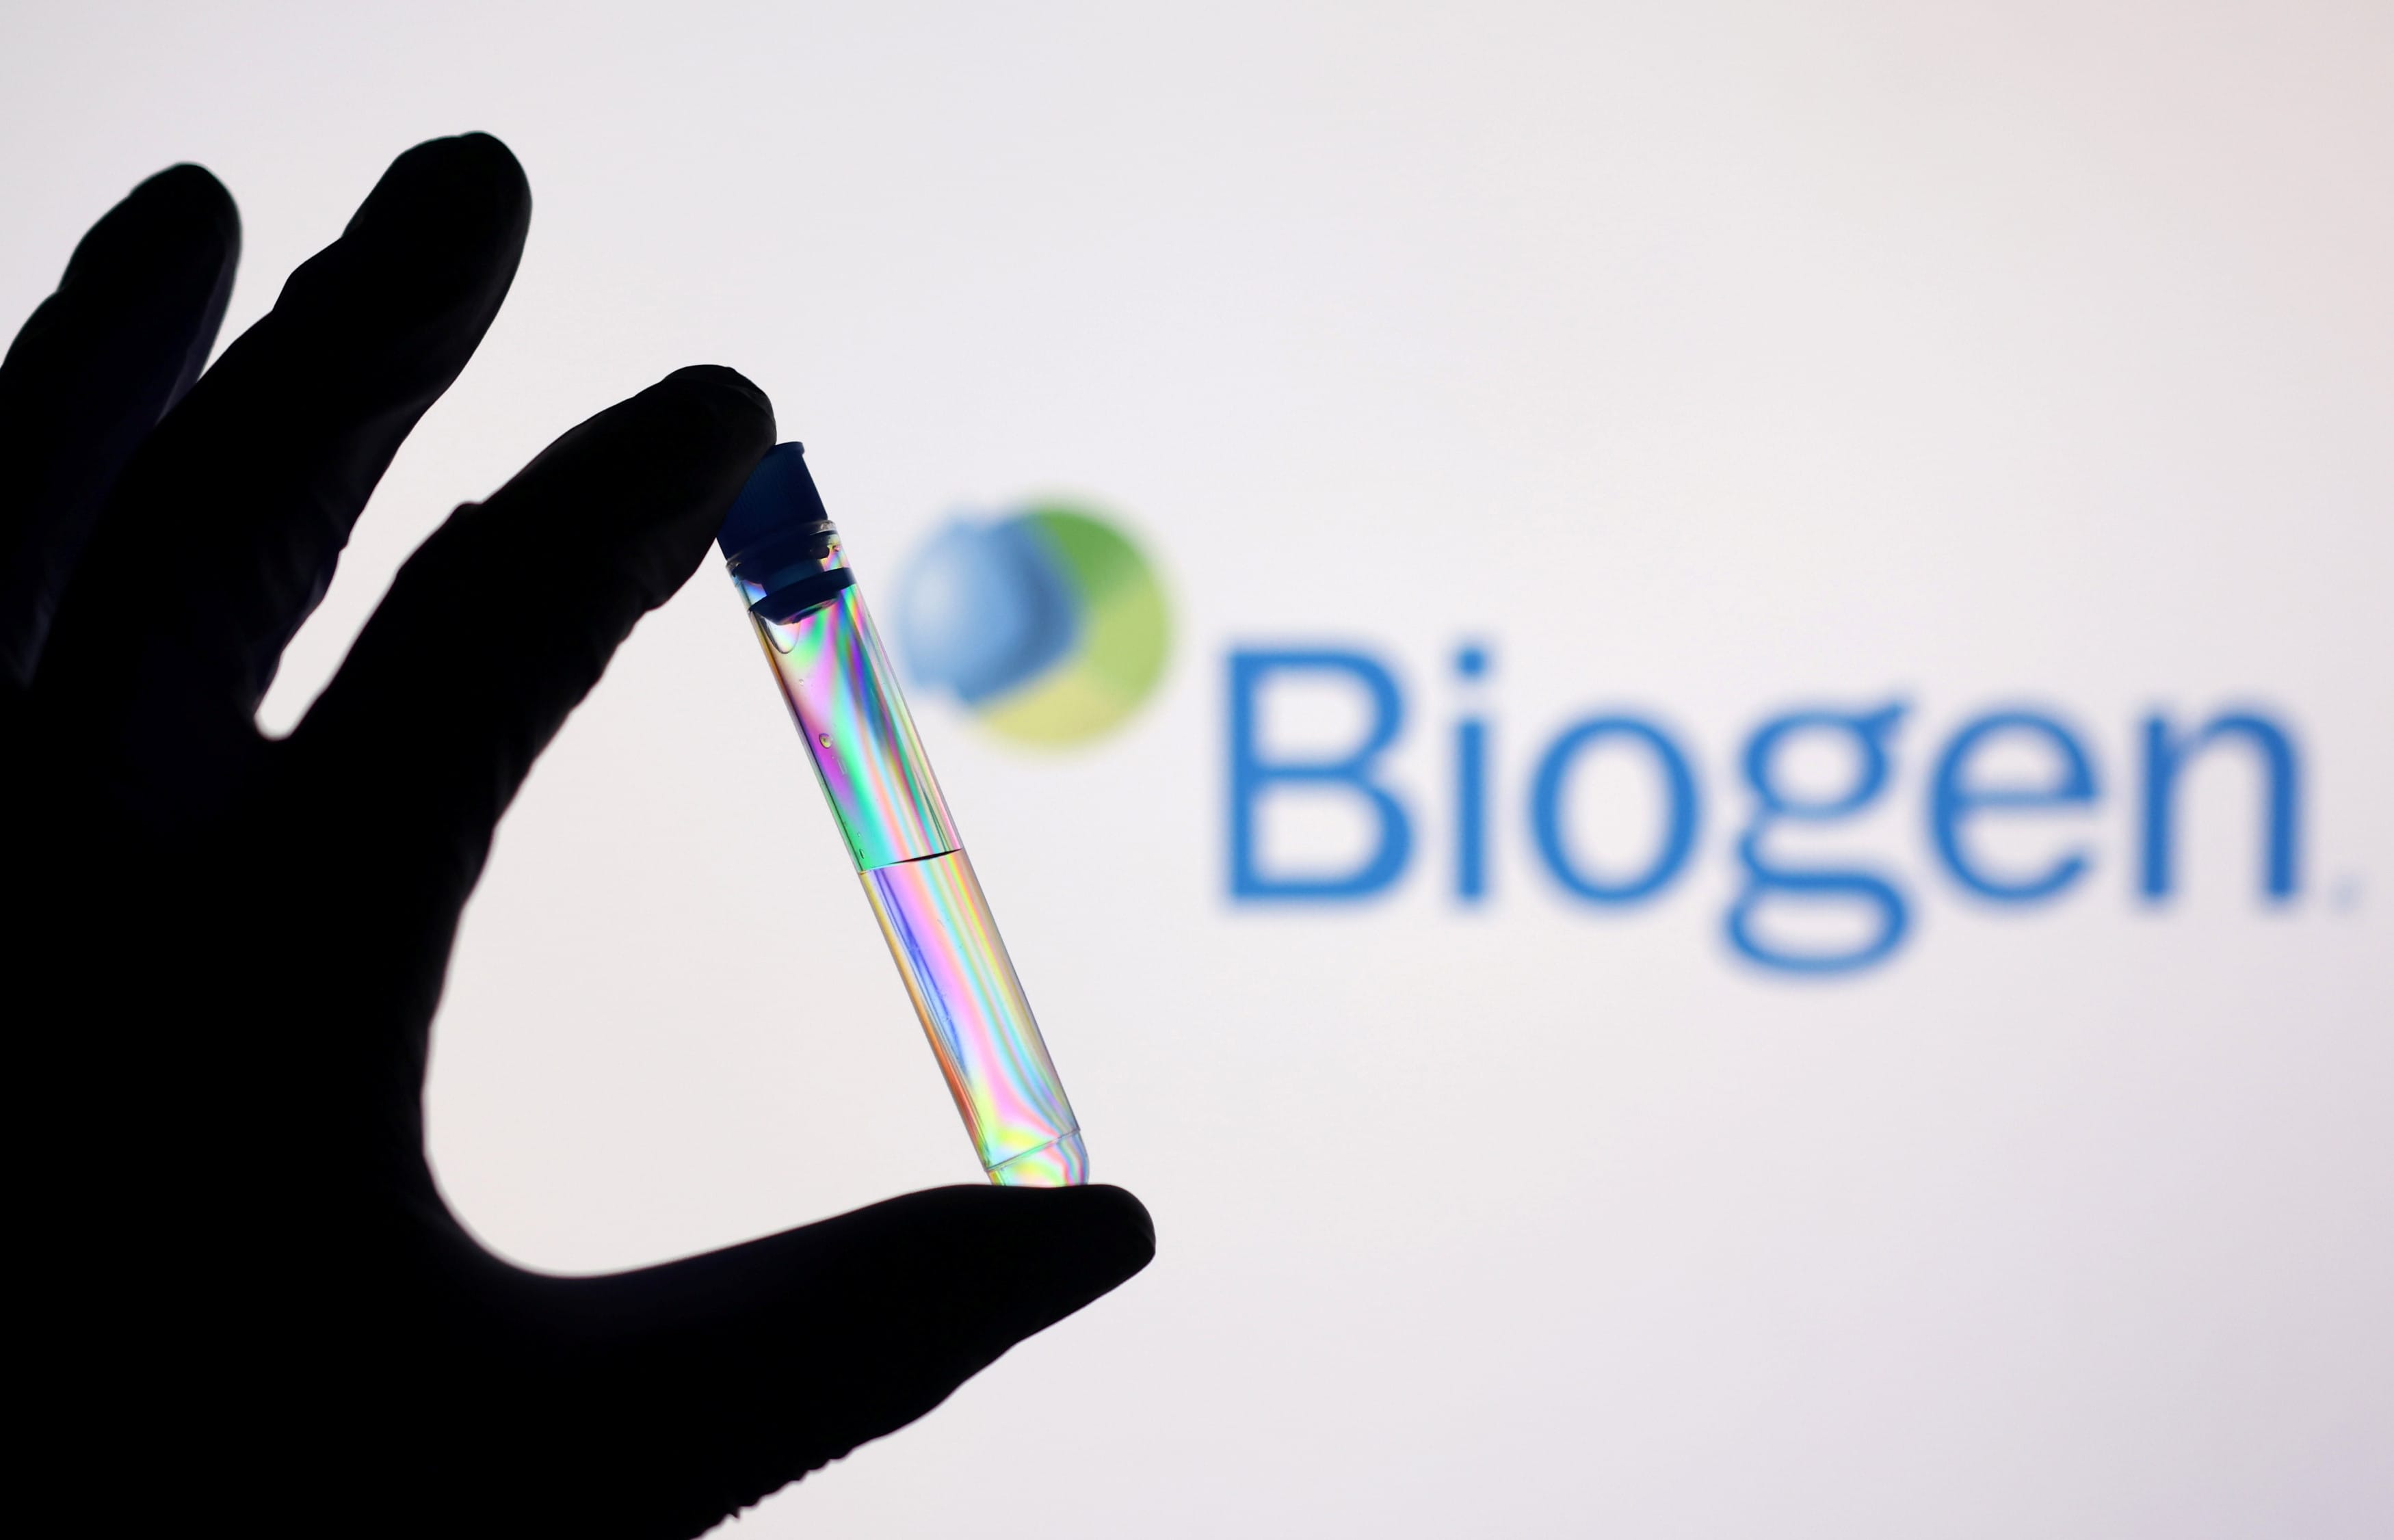 Biogen tops profit estimates as cost cuts take hold, Leqembi launch picks up